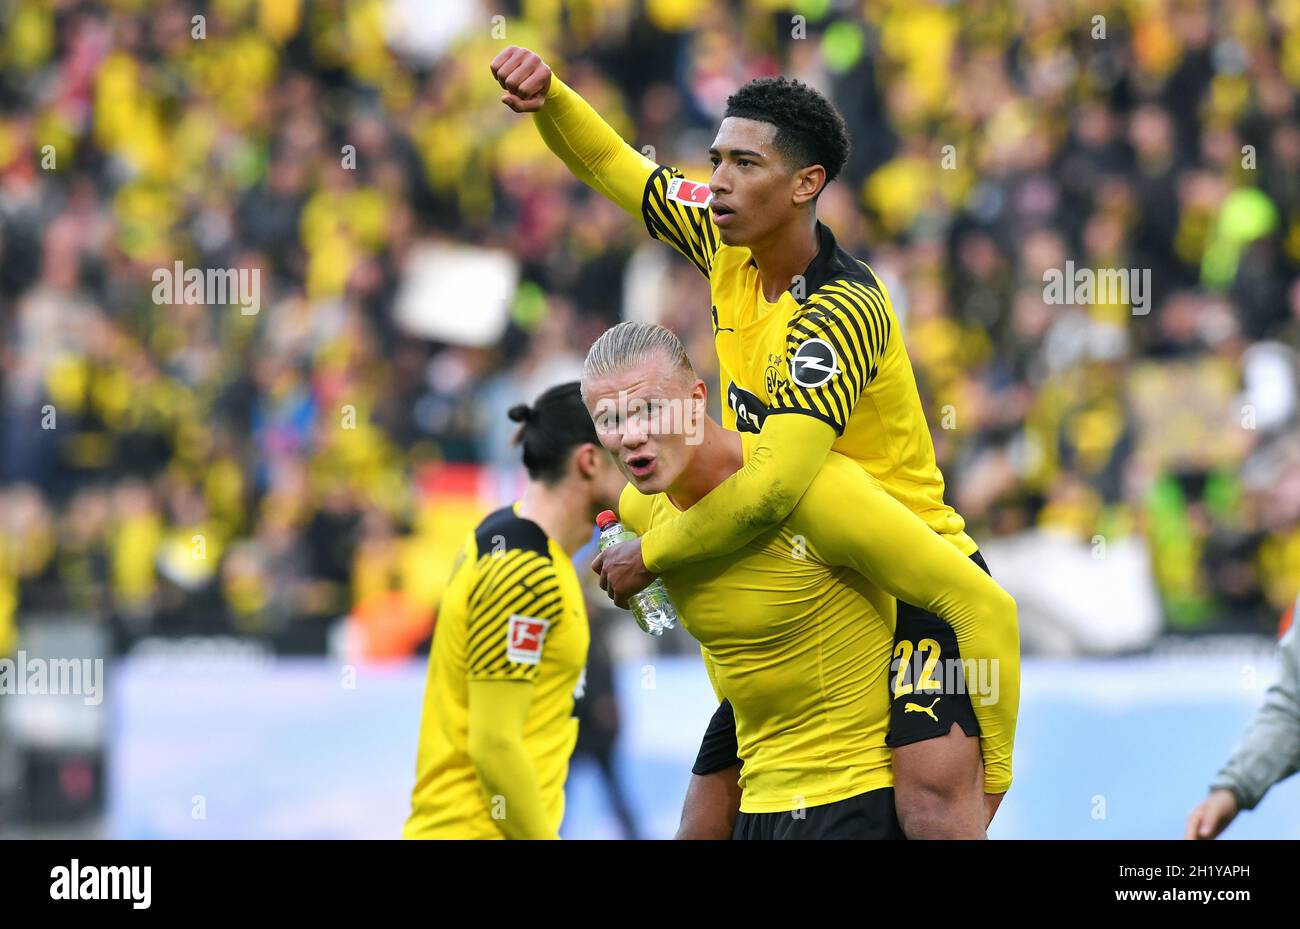 Bundesliga, Signal Iduna Park Dortmund: Bor. Dortmund vs FSV Mainz 05; Erling Haaland and Jude Bellingham celebrate after the match. Stock Photo